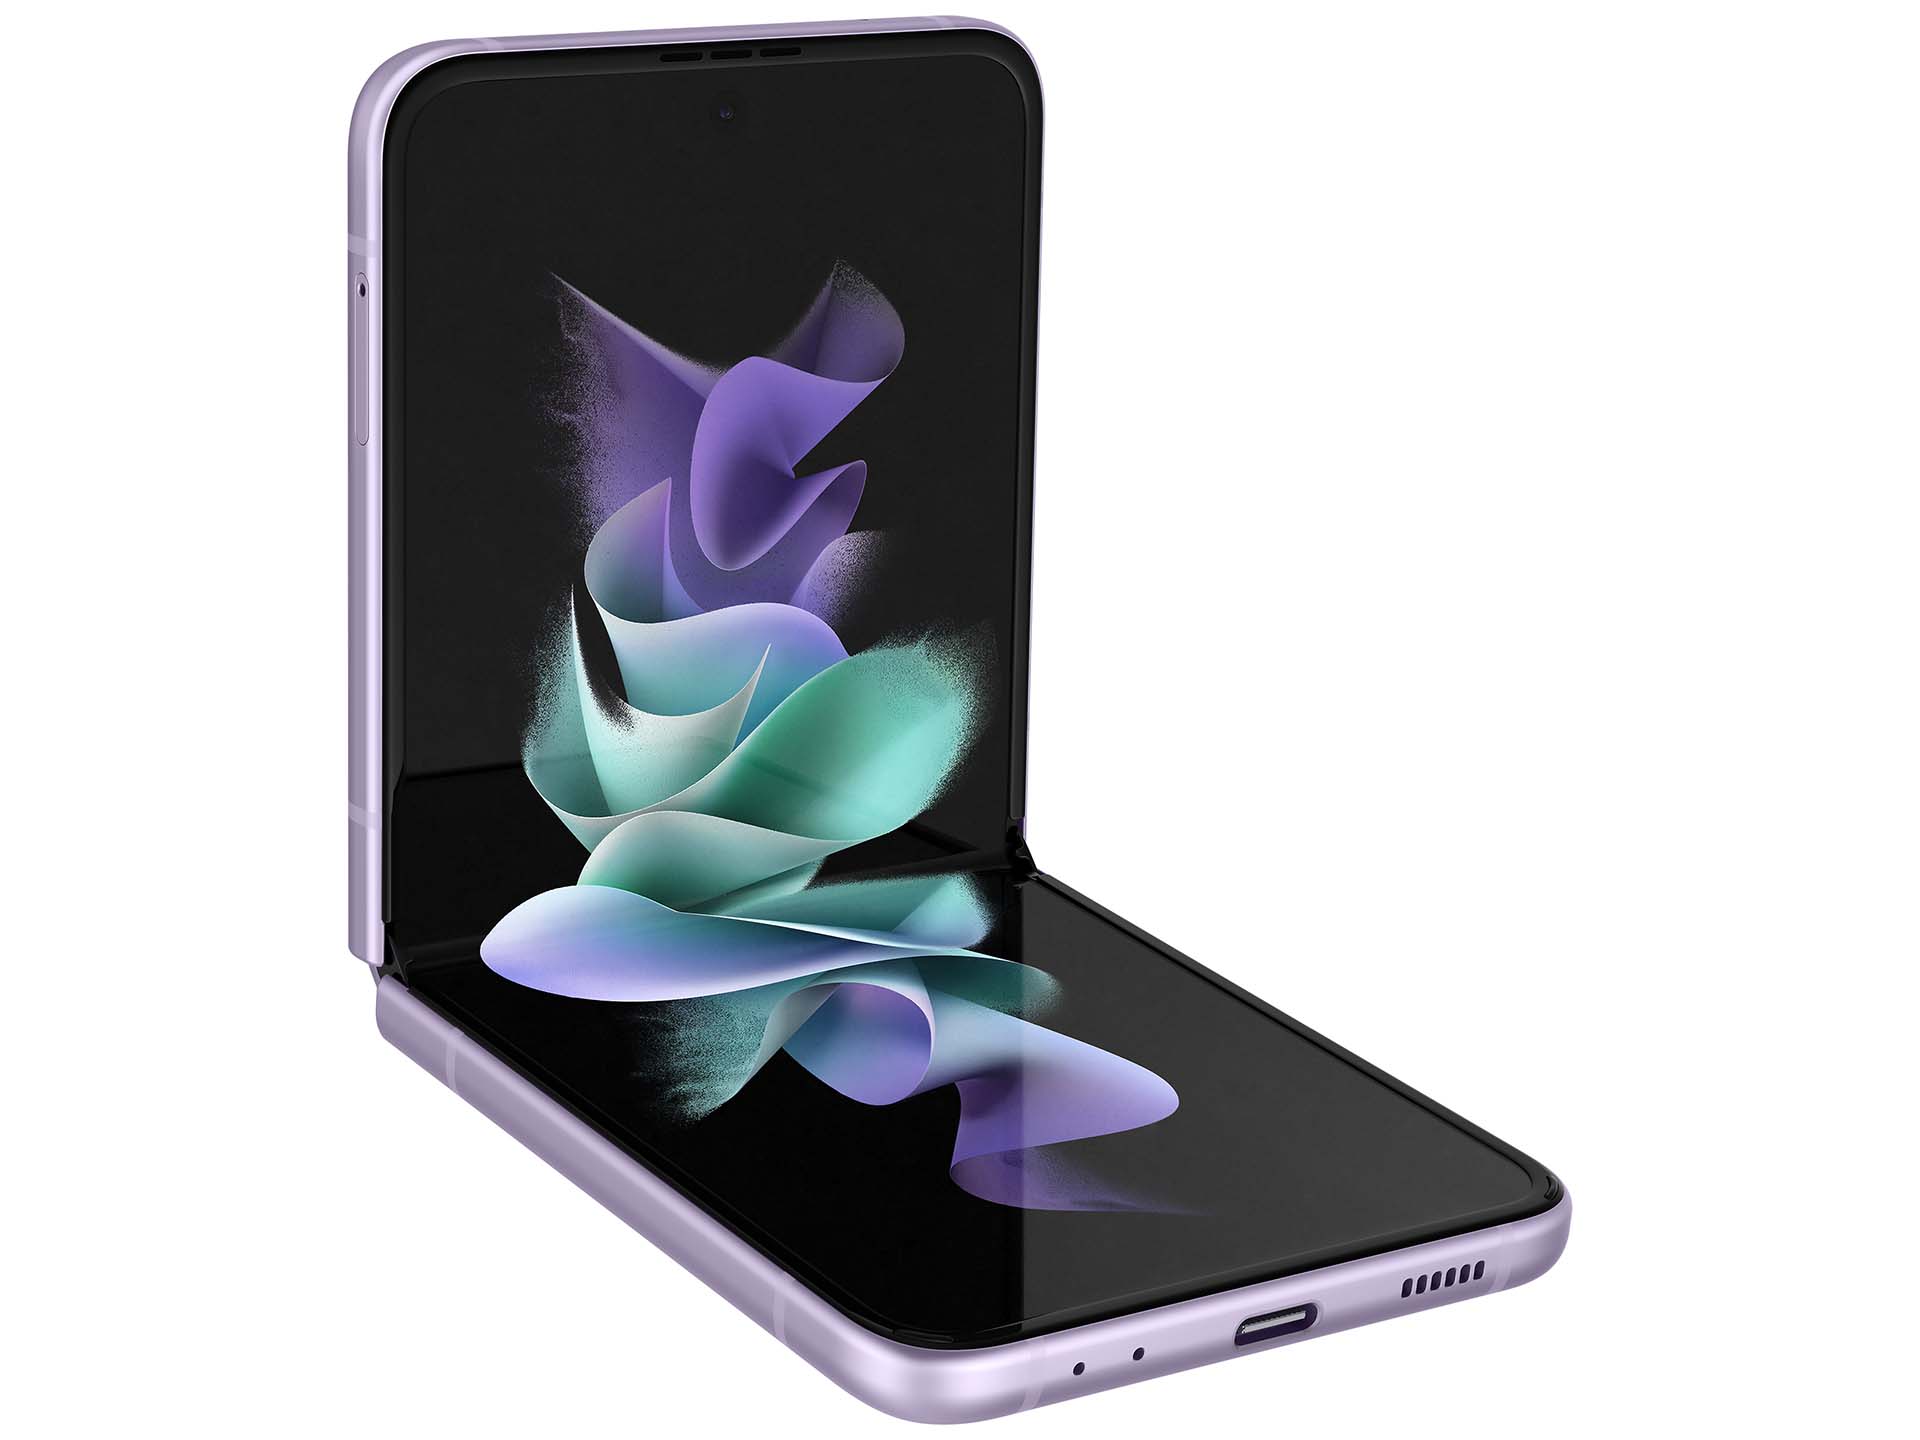 Samsung Galaxy S21 Plus Phantom Violet: Unboxing & Review - Best Premium  Flagship 2021! 